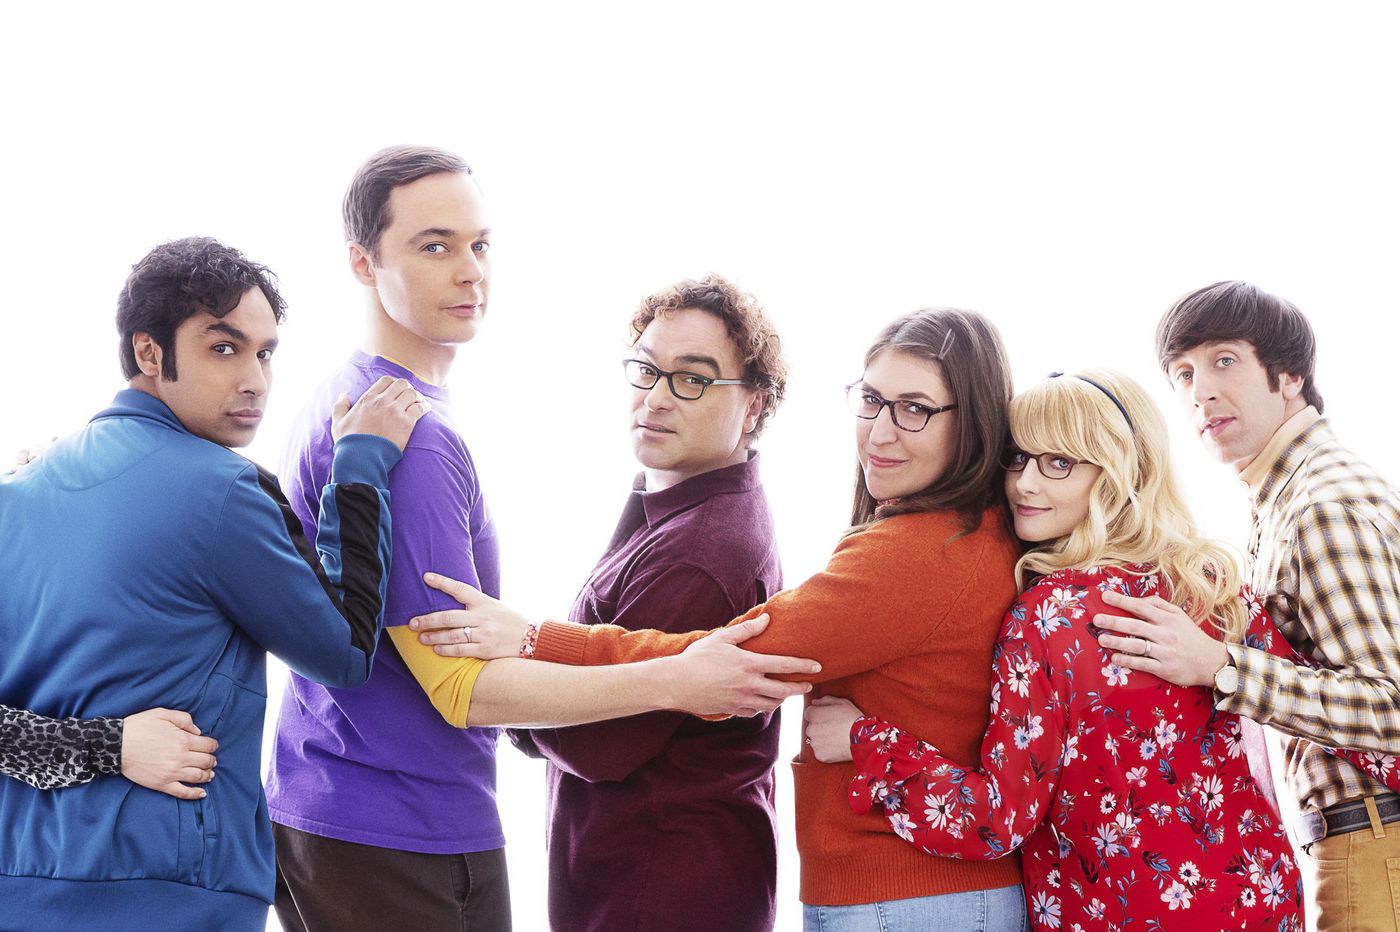 gamers in movies and TV - Big Bang Theory